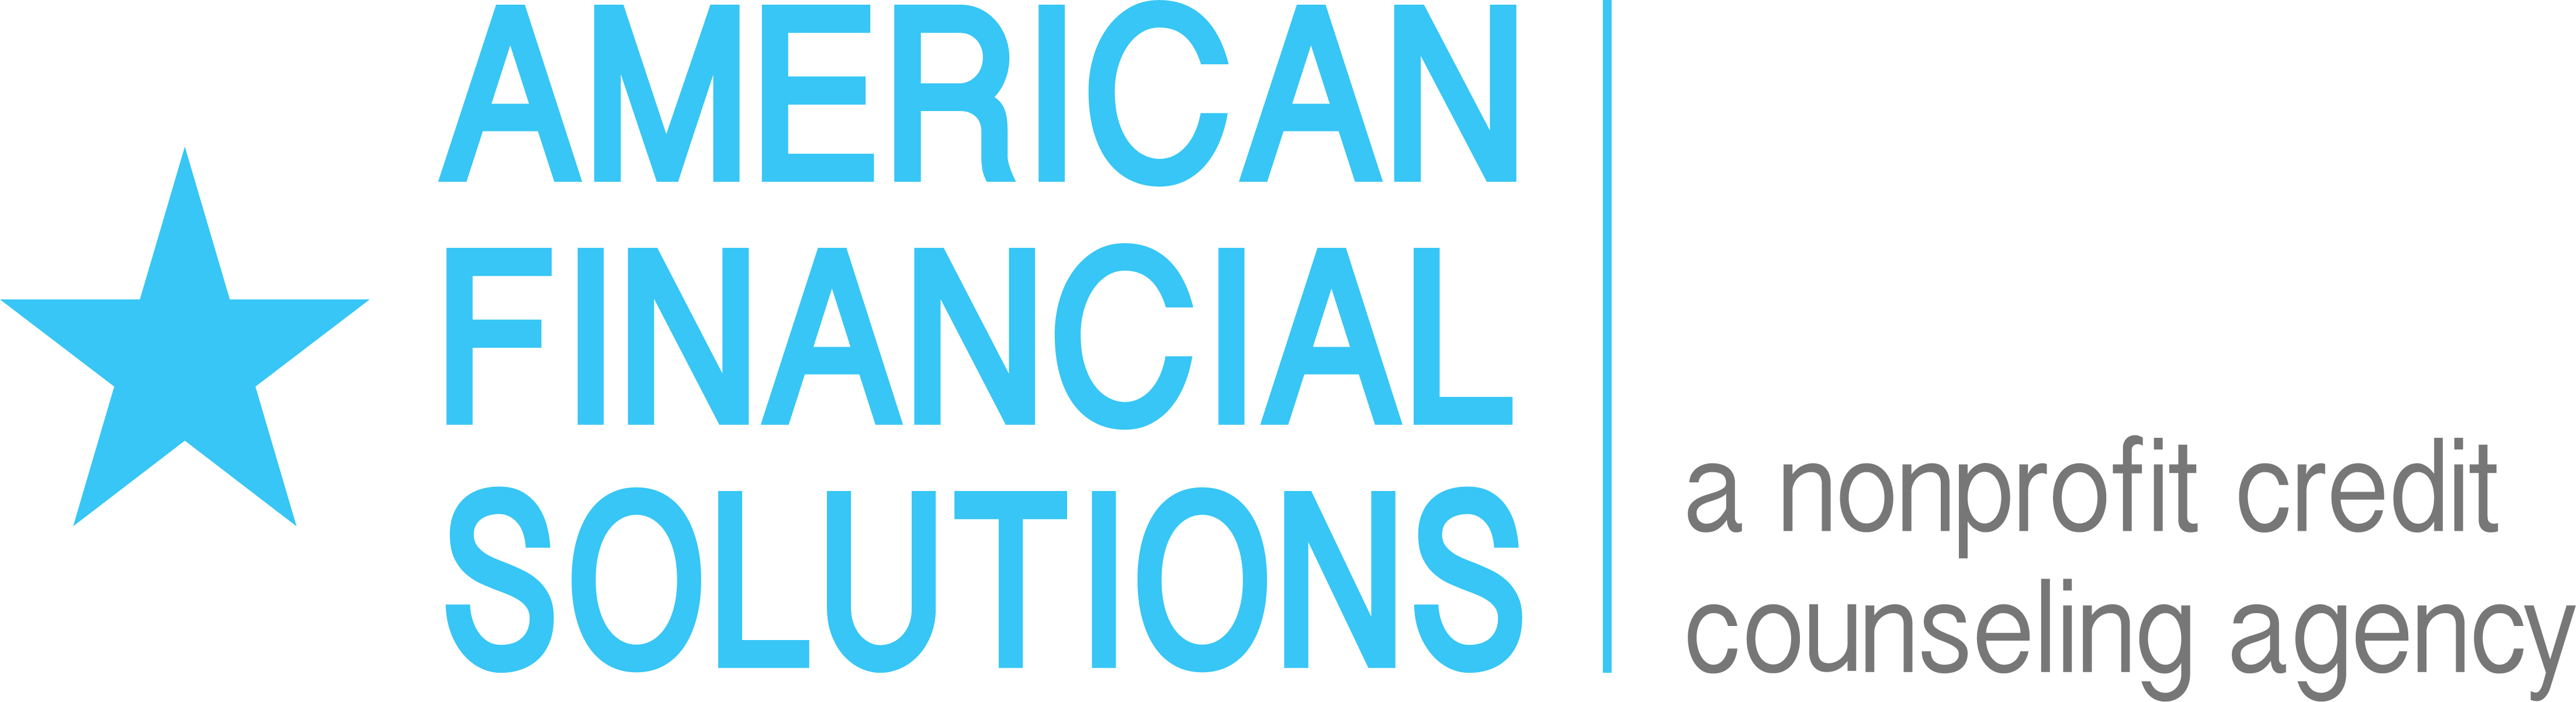 American Financial Solutions_Blue_Long_Logo